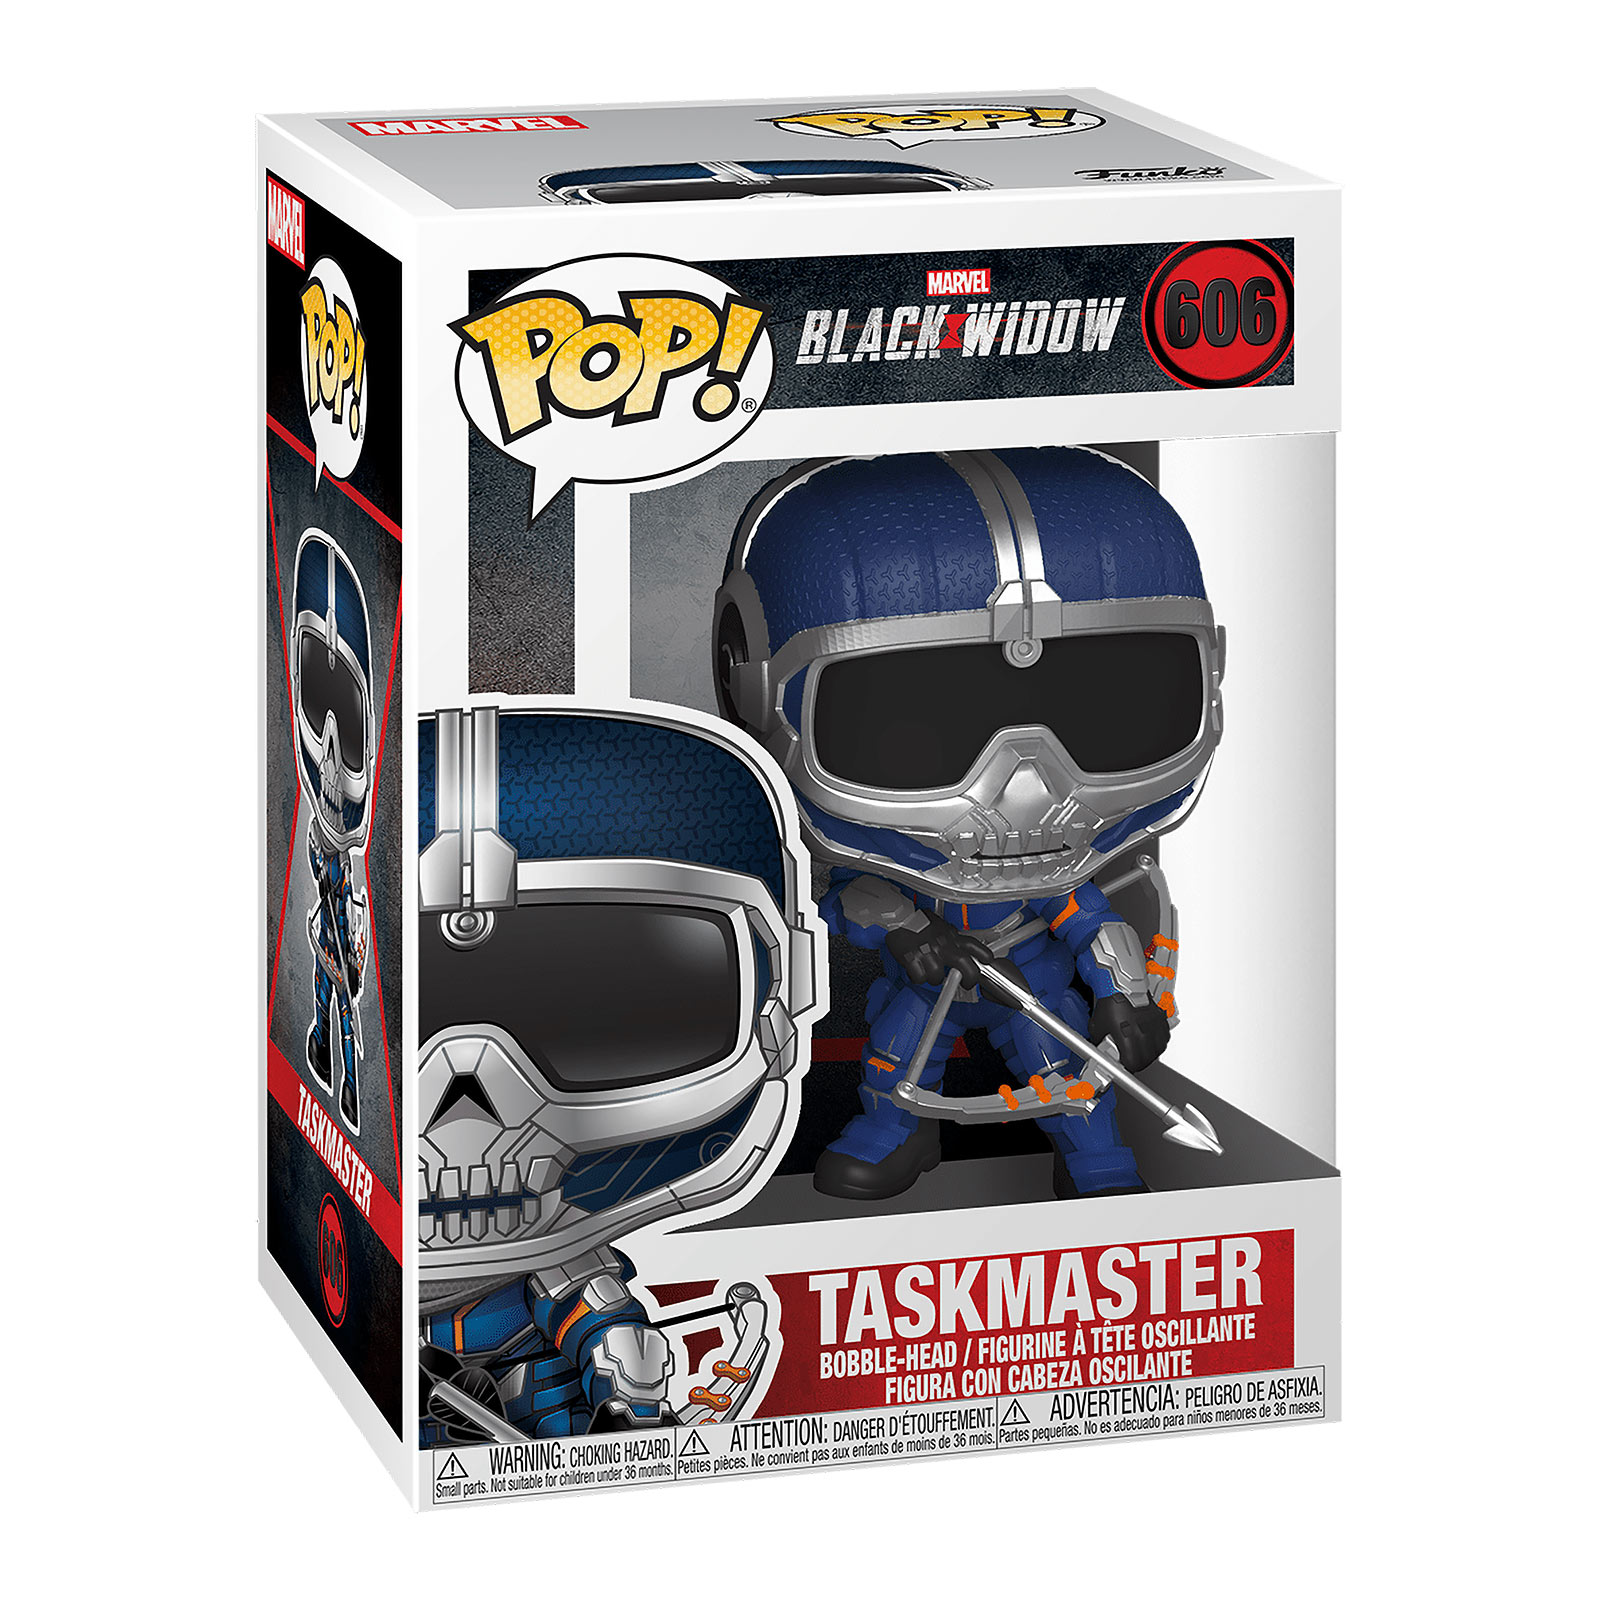 Black Widow - Taskmaster with bow Funko Pop bobblehead figure